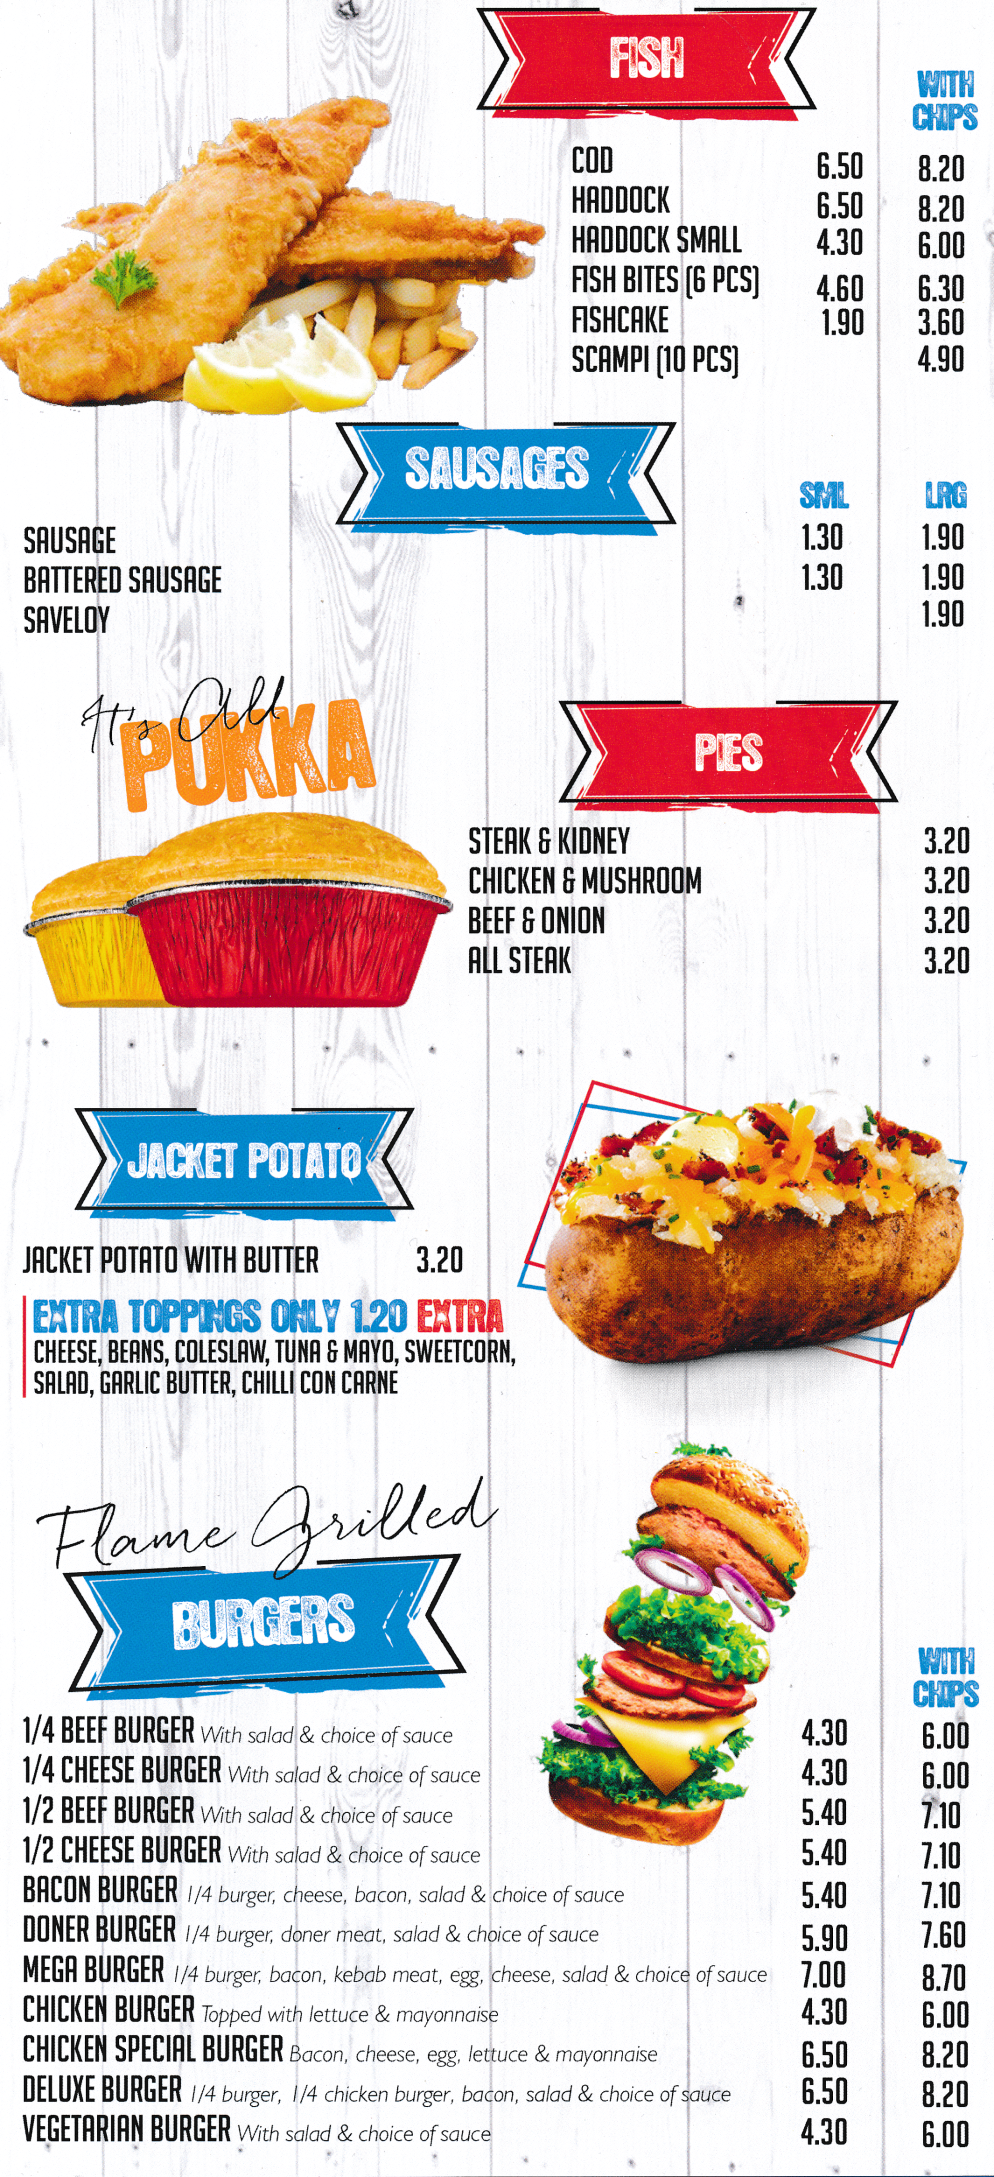 Menu for Billy's World Of Food - Jacket Potatoes, Pukka Pies, Cod, Haddock, Cheese Burger, Beef Burger, Chicken Burger..